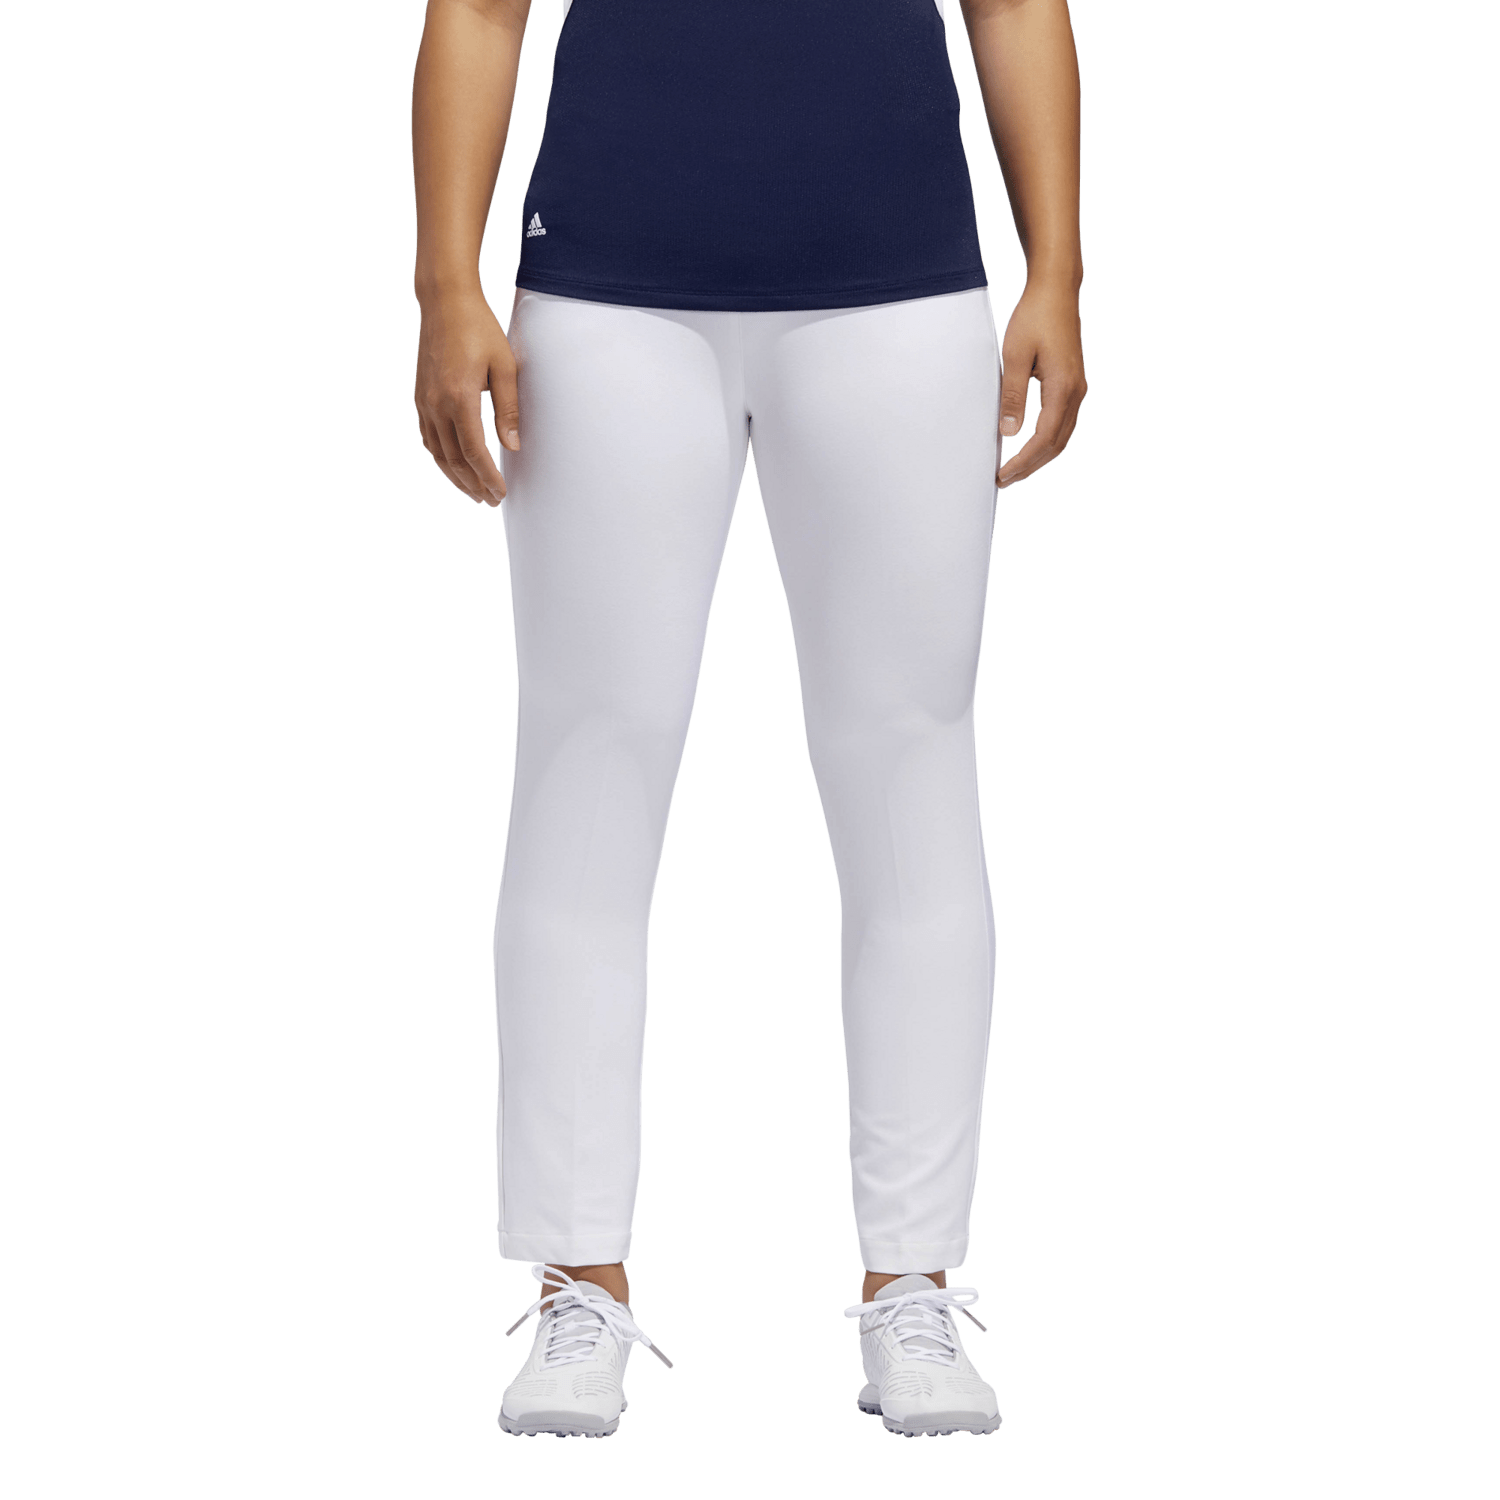 adidas ladies adistar cropped golf trousers